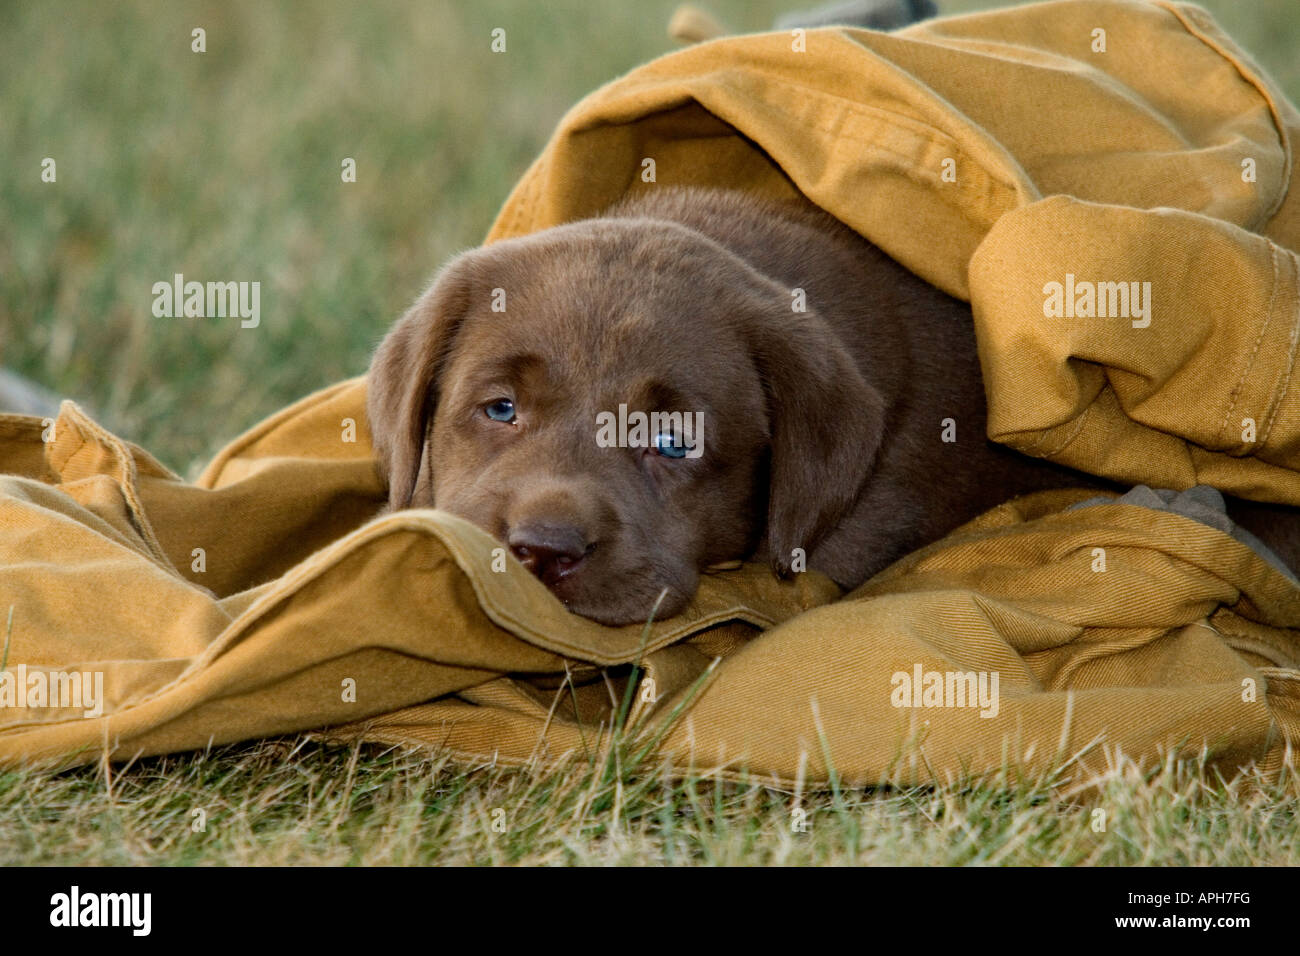 Chocolate Labrador retriever lying on a hunting coat Stock Photo